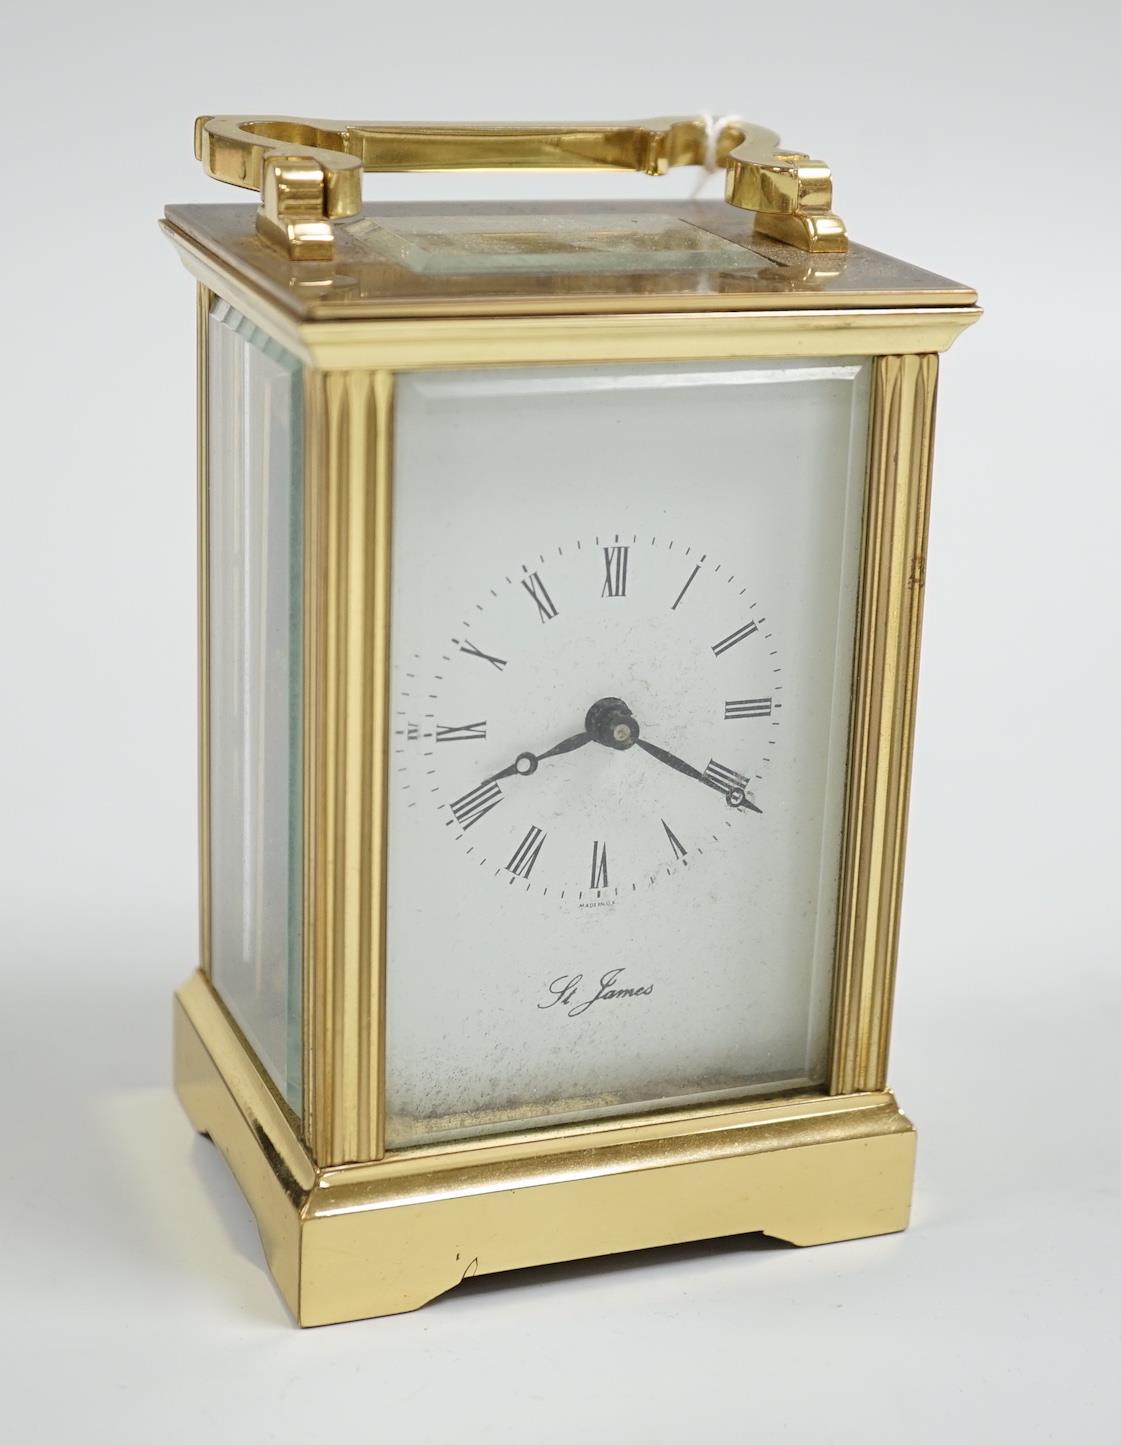 A St James carriage timepiece, 12cm high